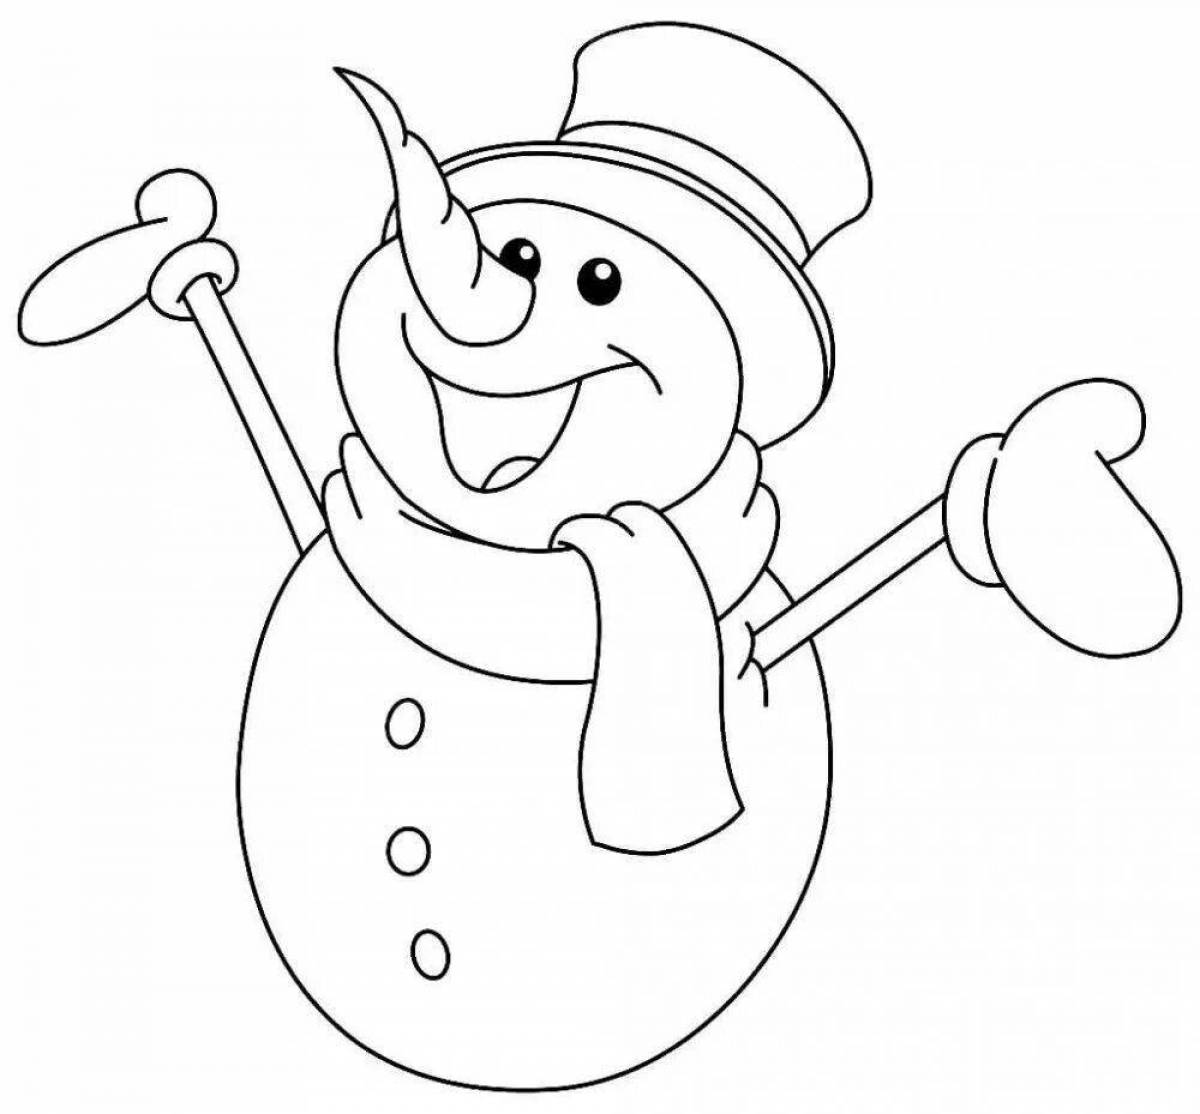 Fun coloring funny snowmen for kids